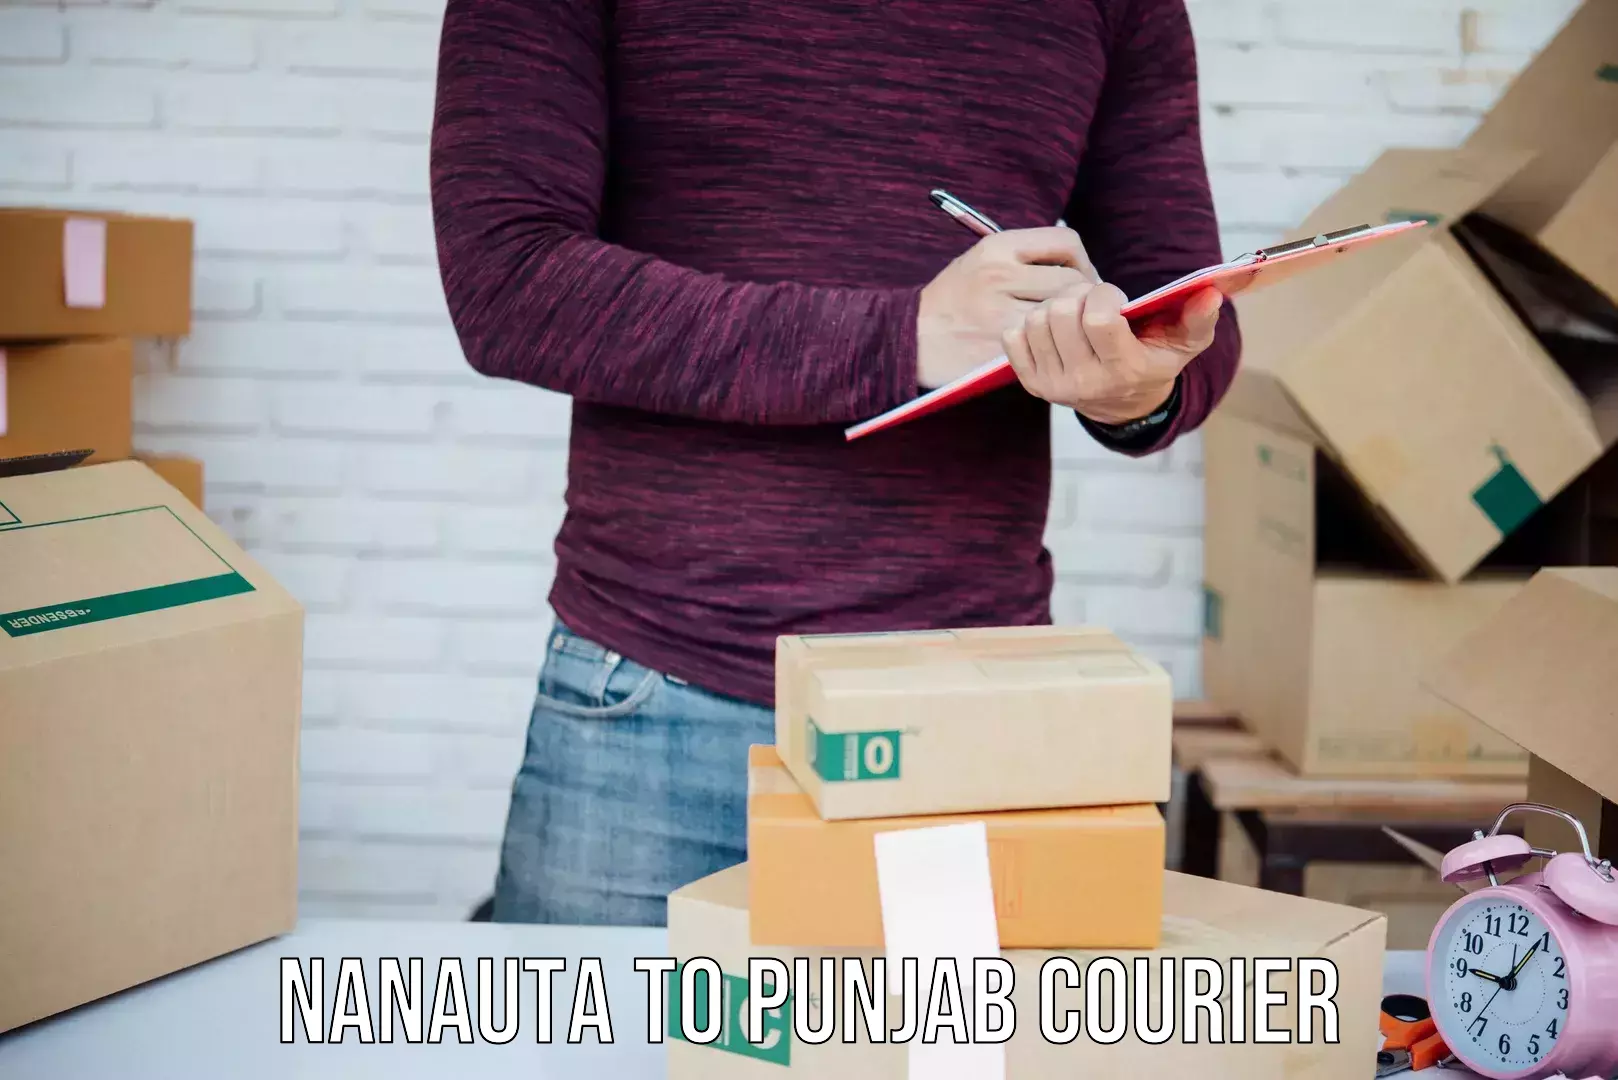 Courier service partnerships Nanauta to Punjab